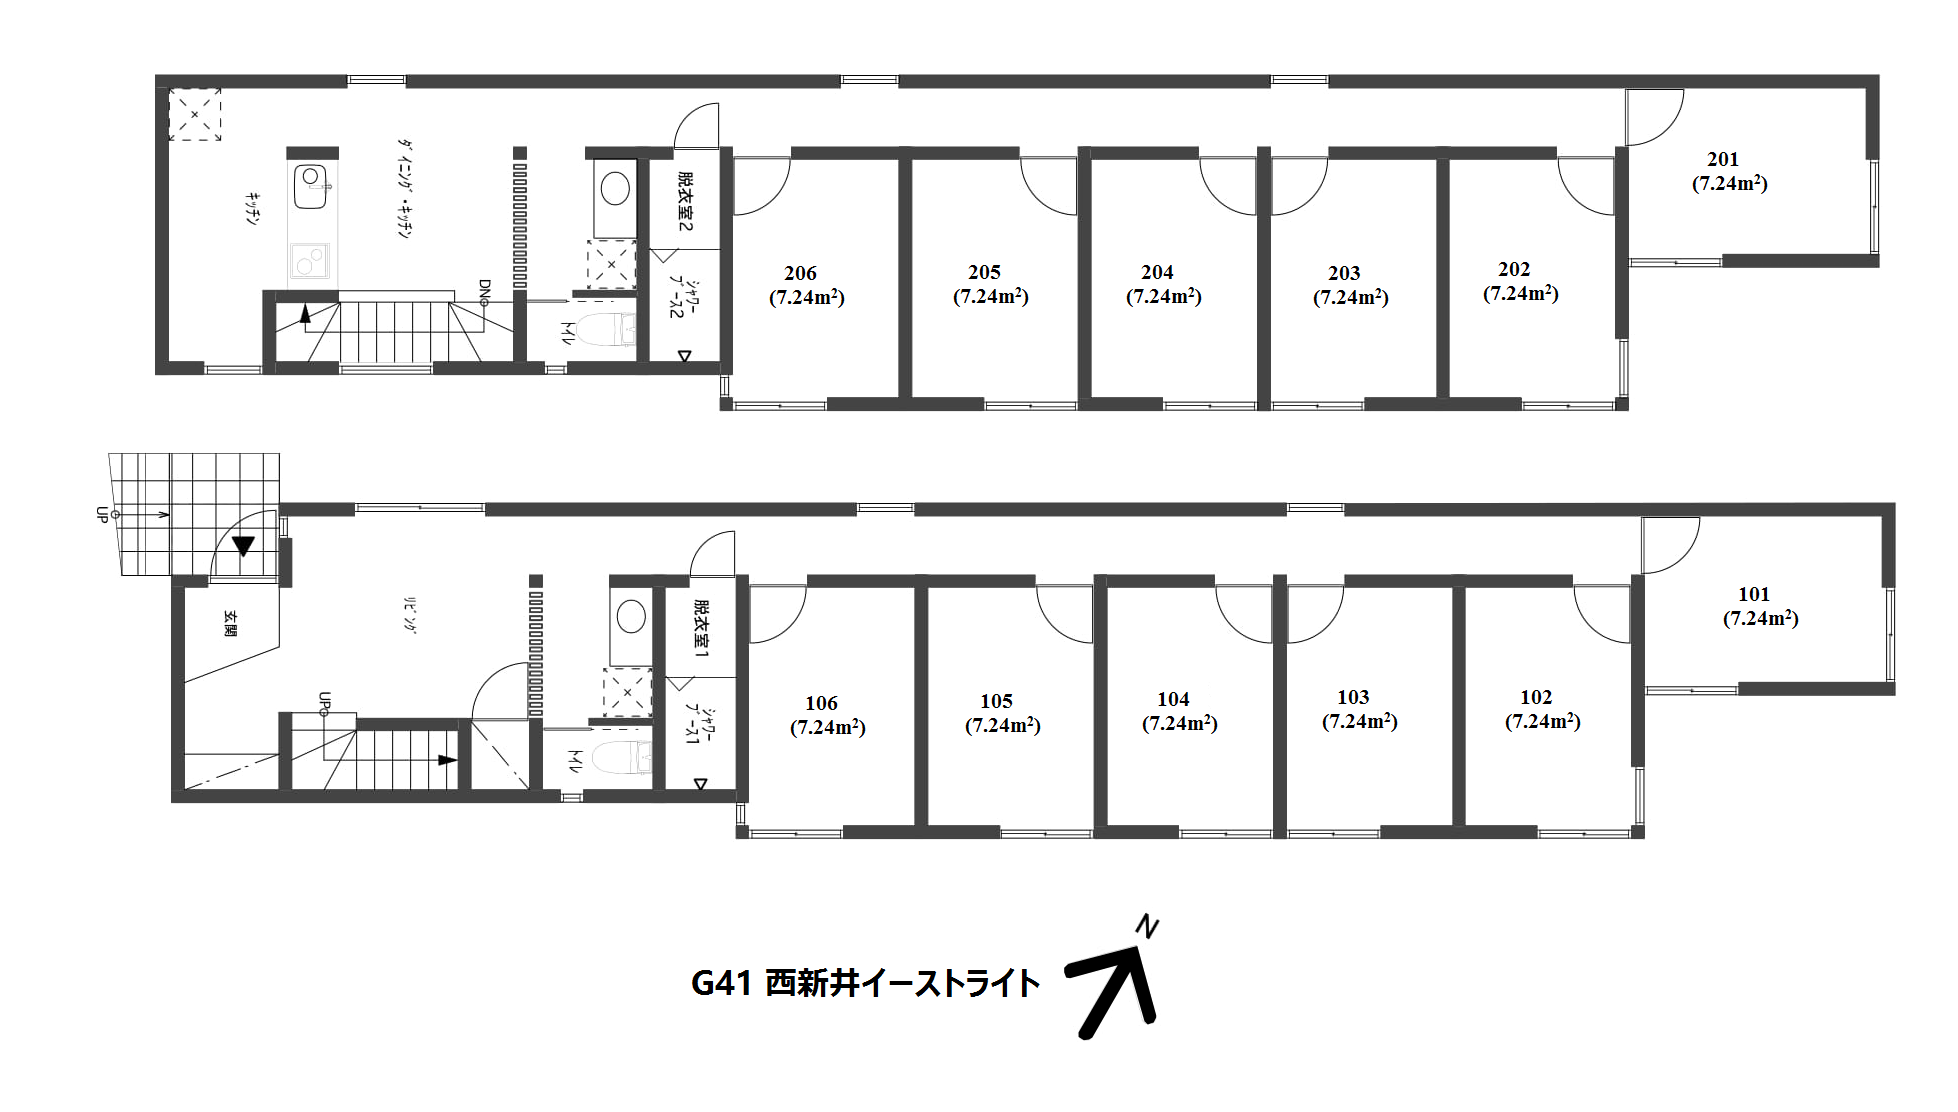 G41/J316 Tokyoβ 梅島1（西新井 イーストライト）間取り図